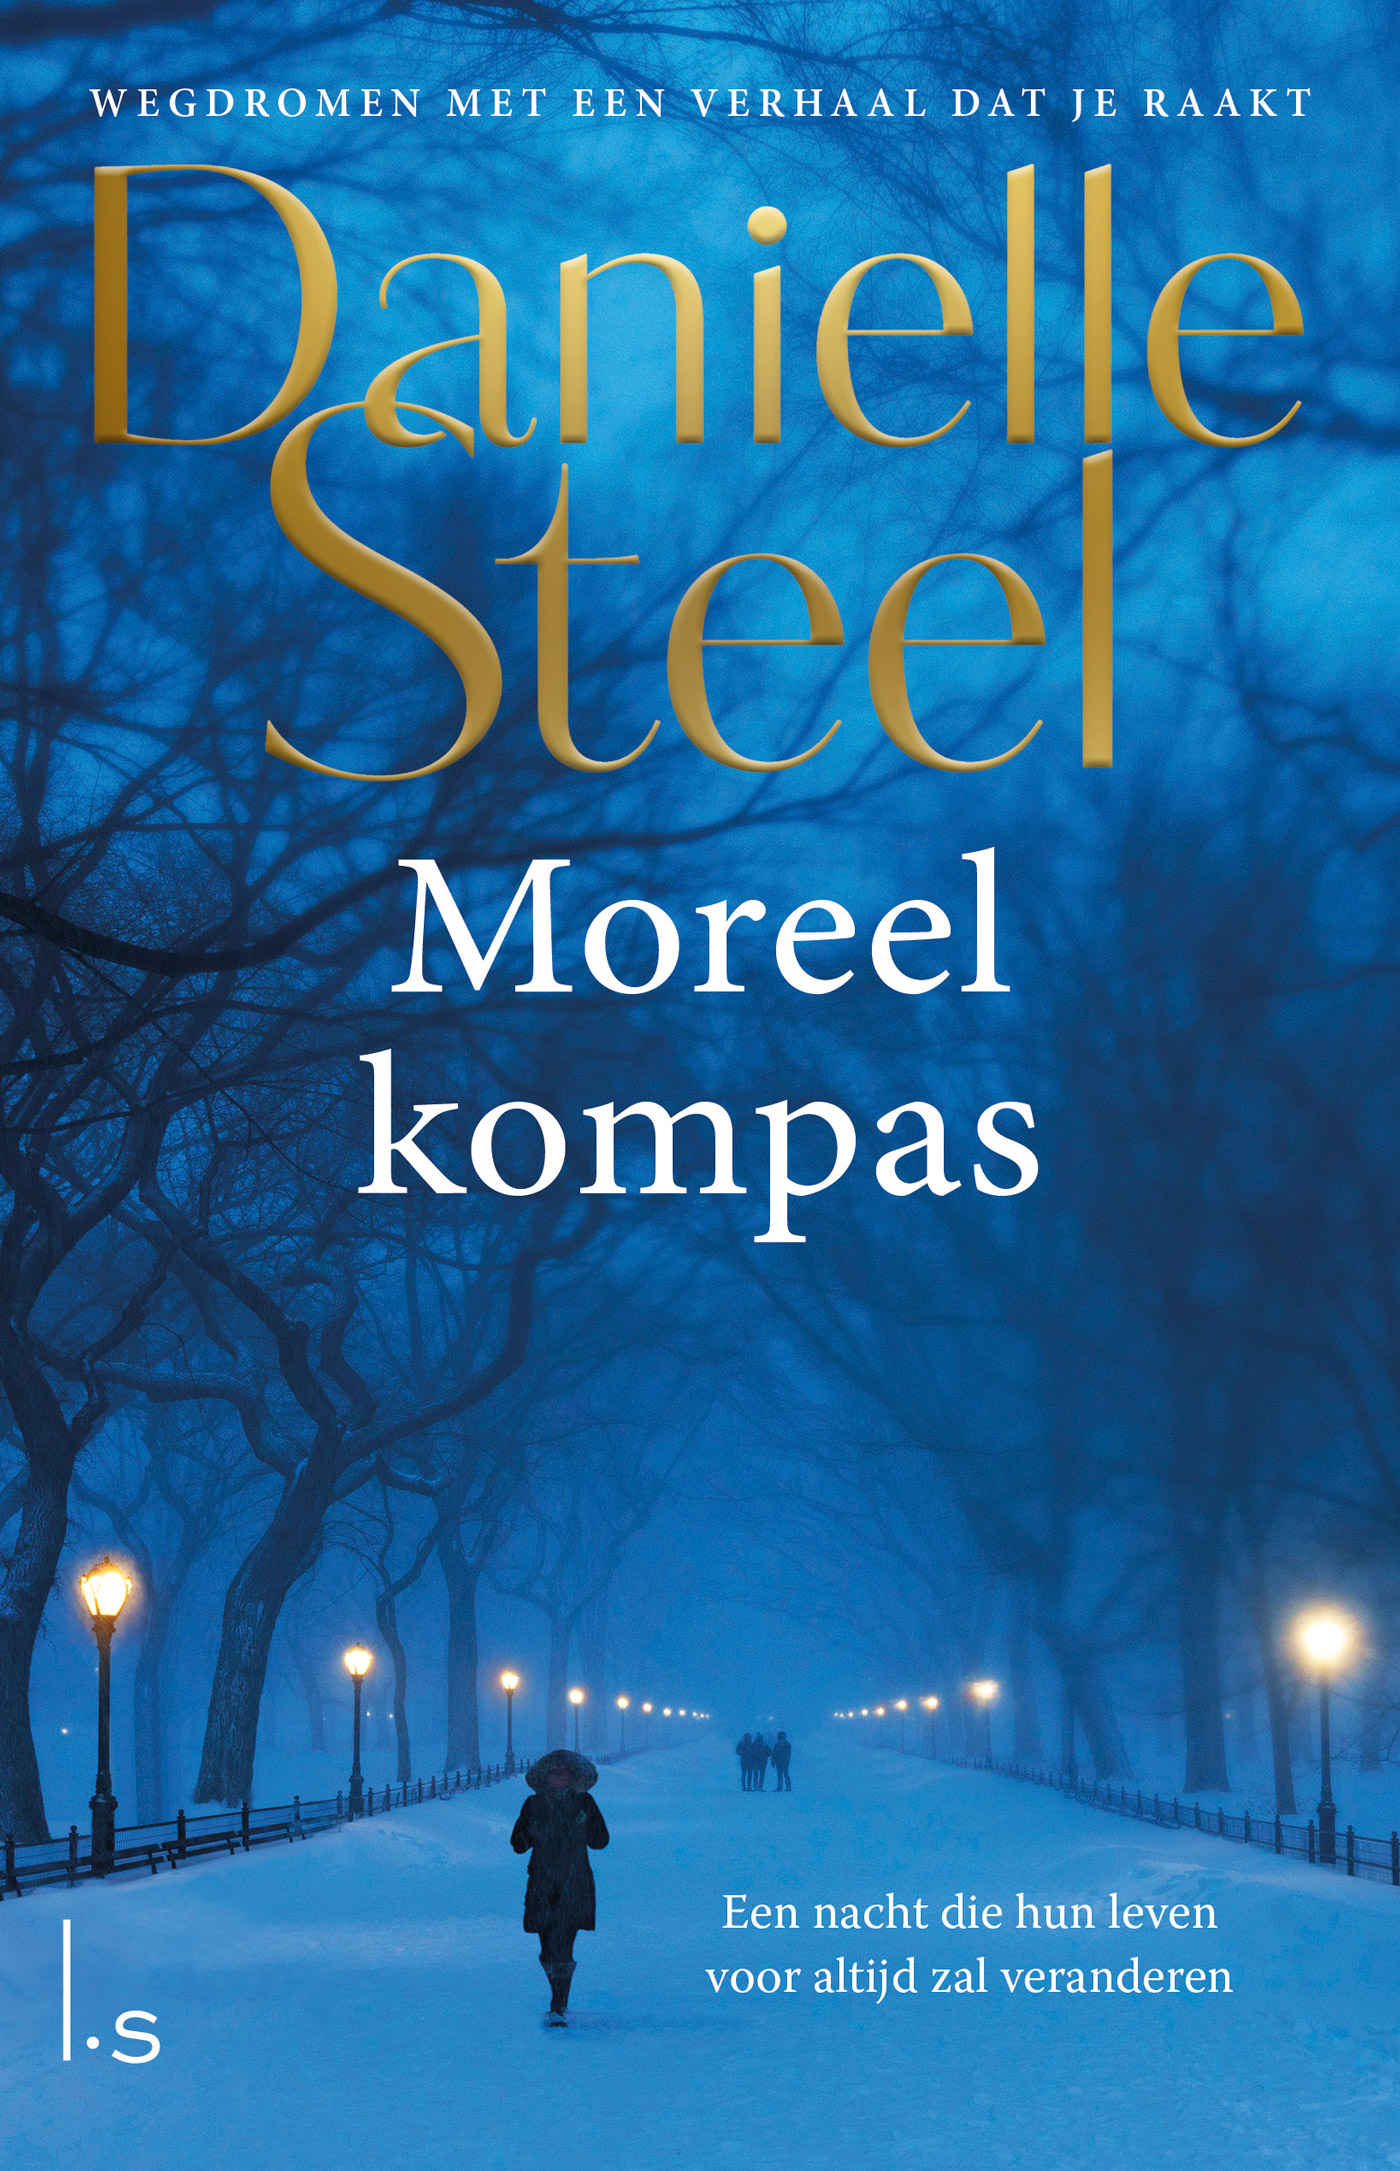 Steel, Danielle-Moreel kompas